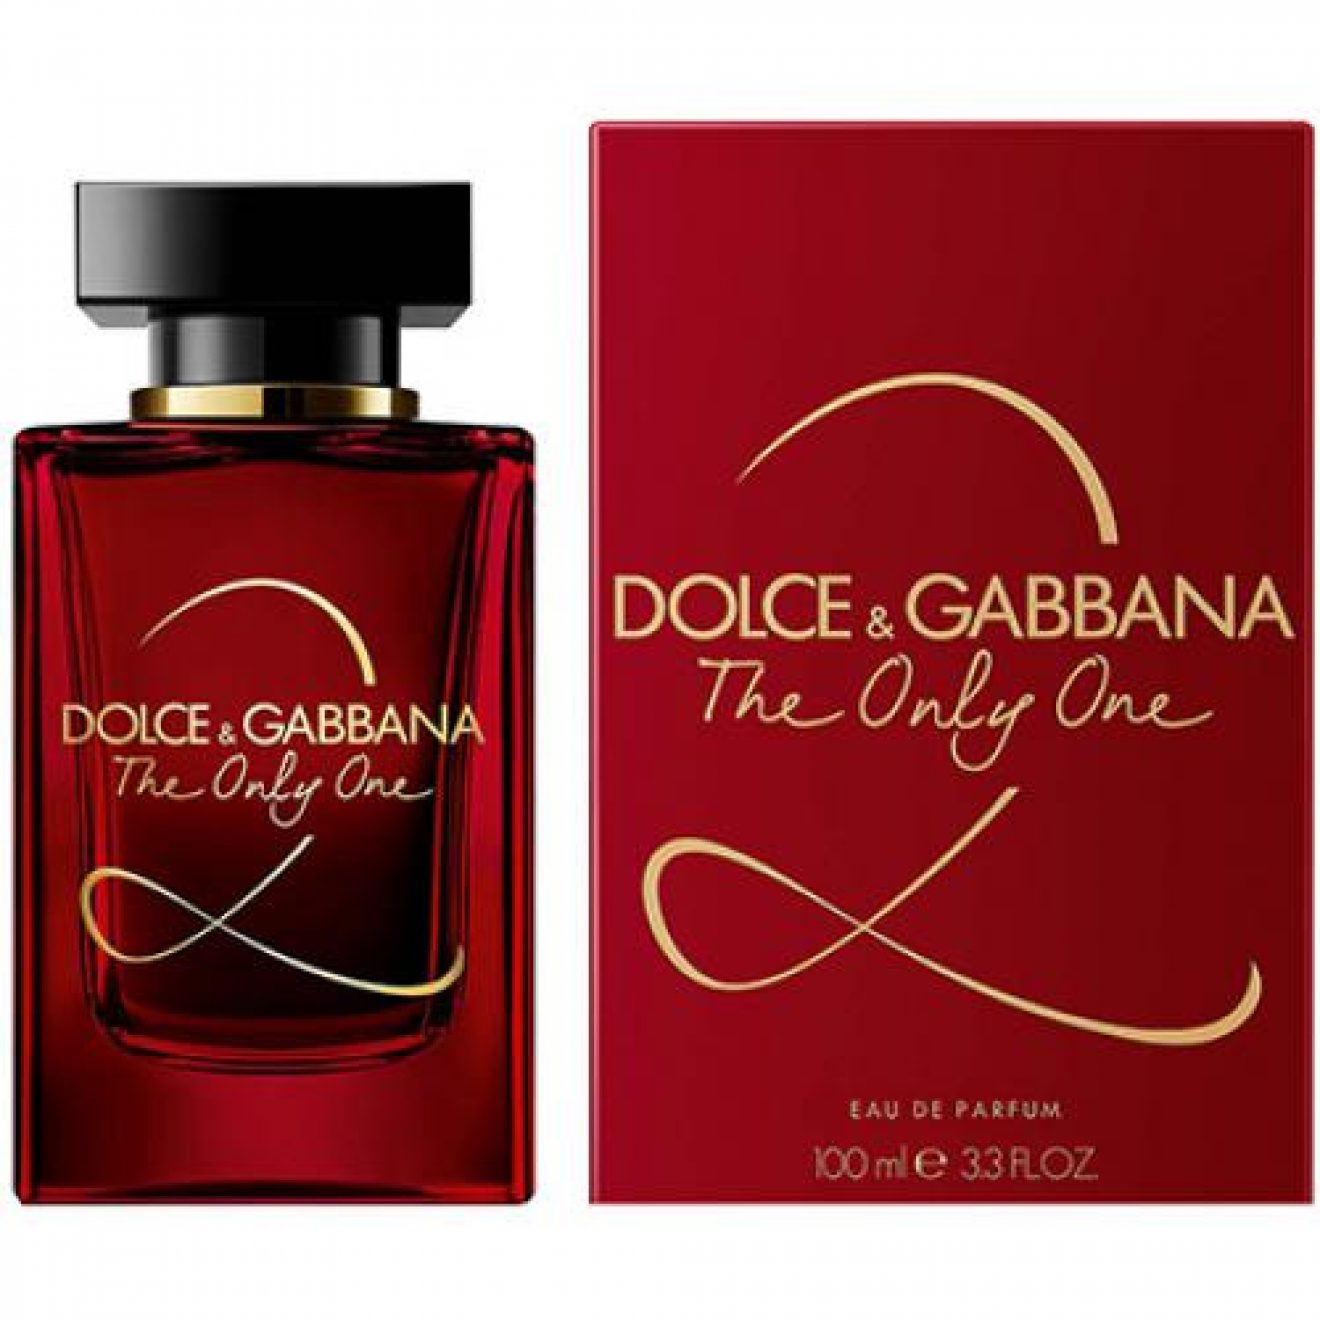 Дольче габбана парфюм новинка. Dolce Gabbana the only one 2 100 мл. Dolce & Gabbana the only one, EDP., 100 ml. Аромат Dolce Gabbana the only one 2 красный. Dolce& Gabbana the only one 2 EDP, 100 ml.